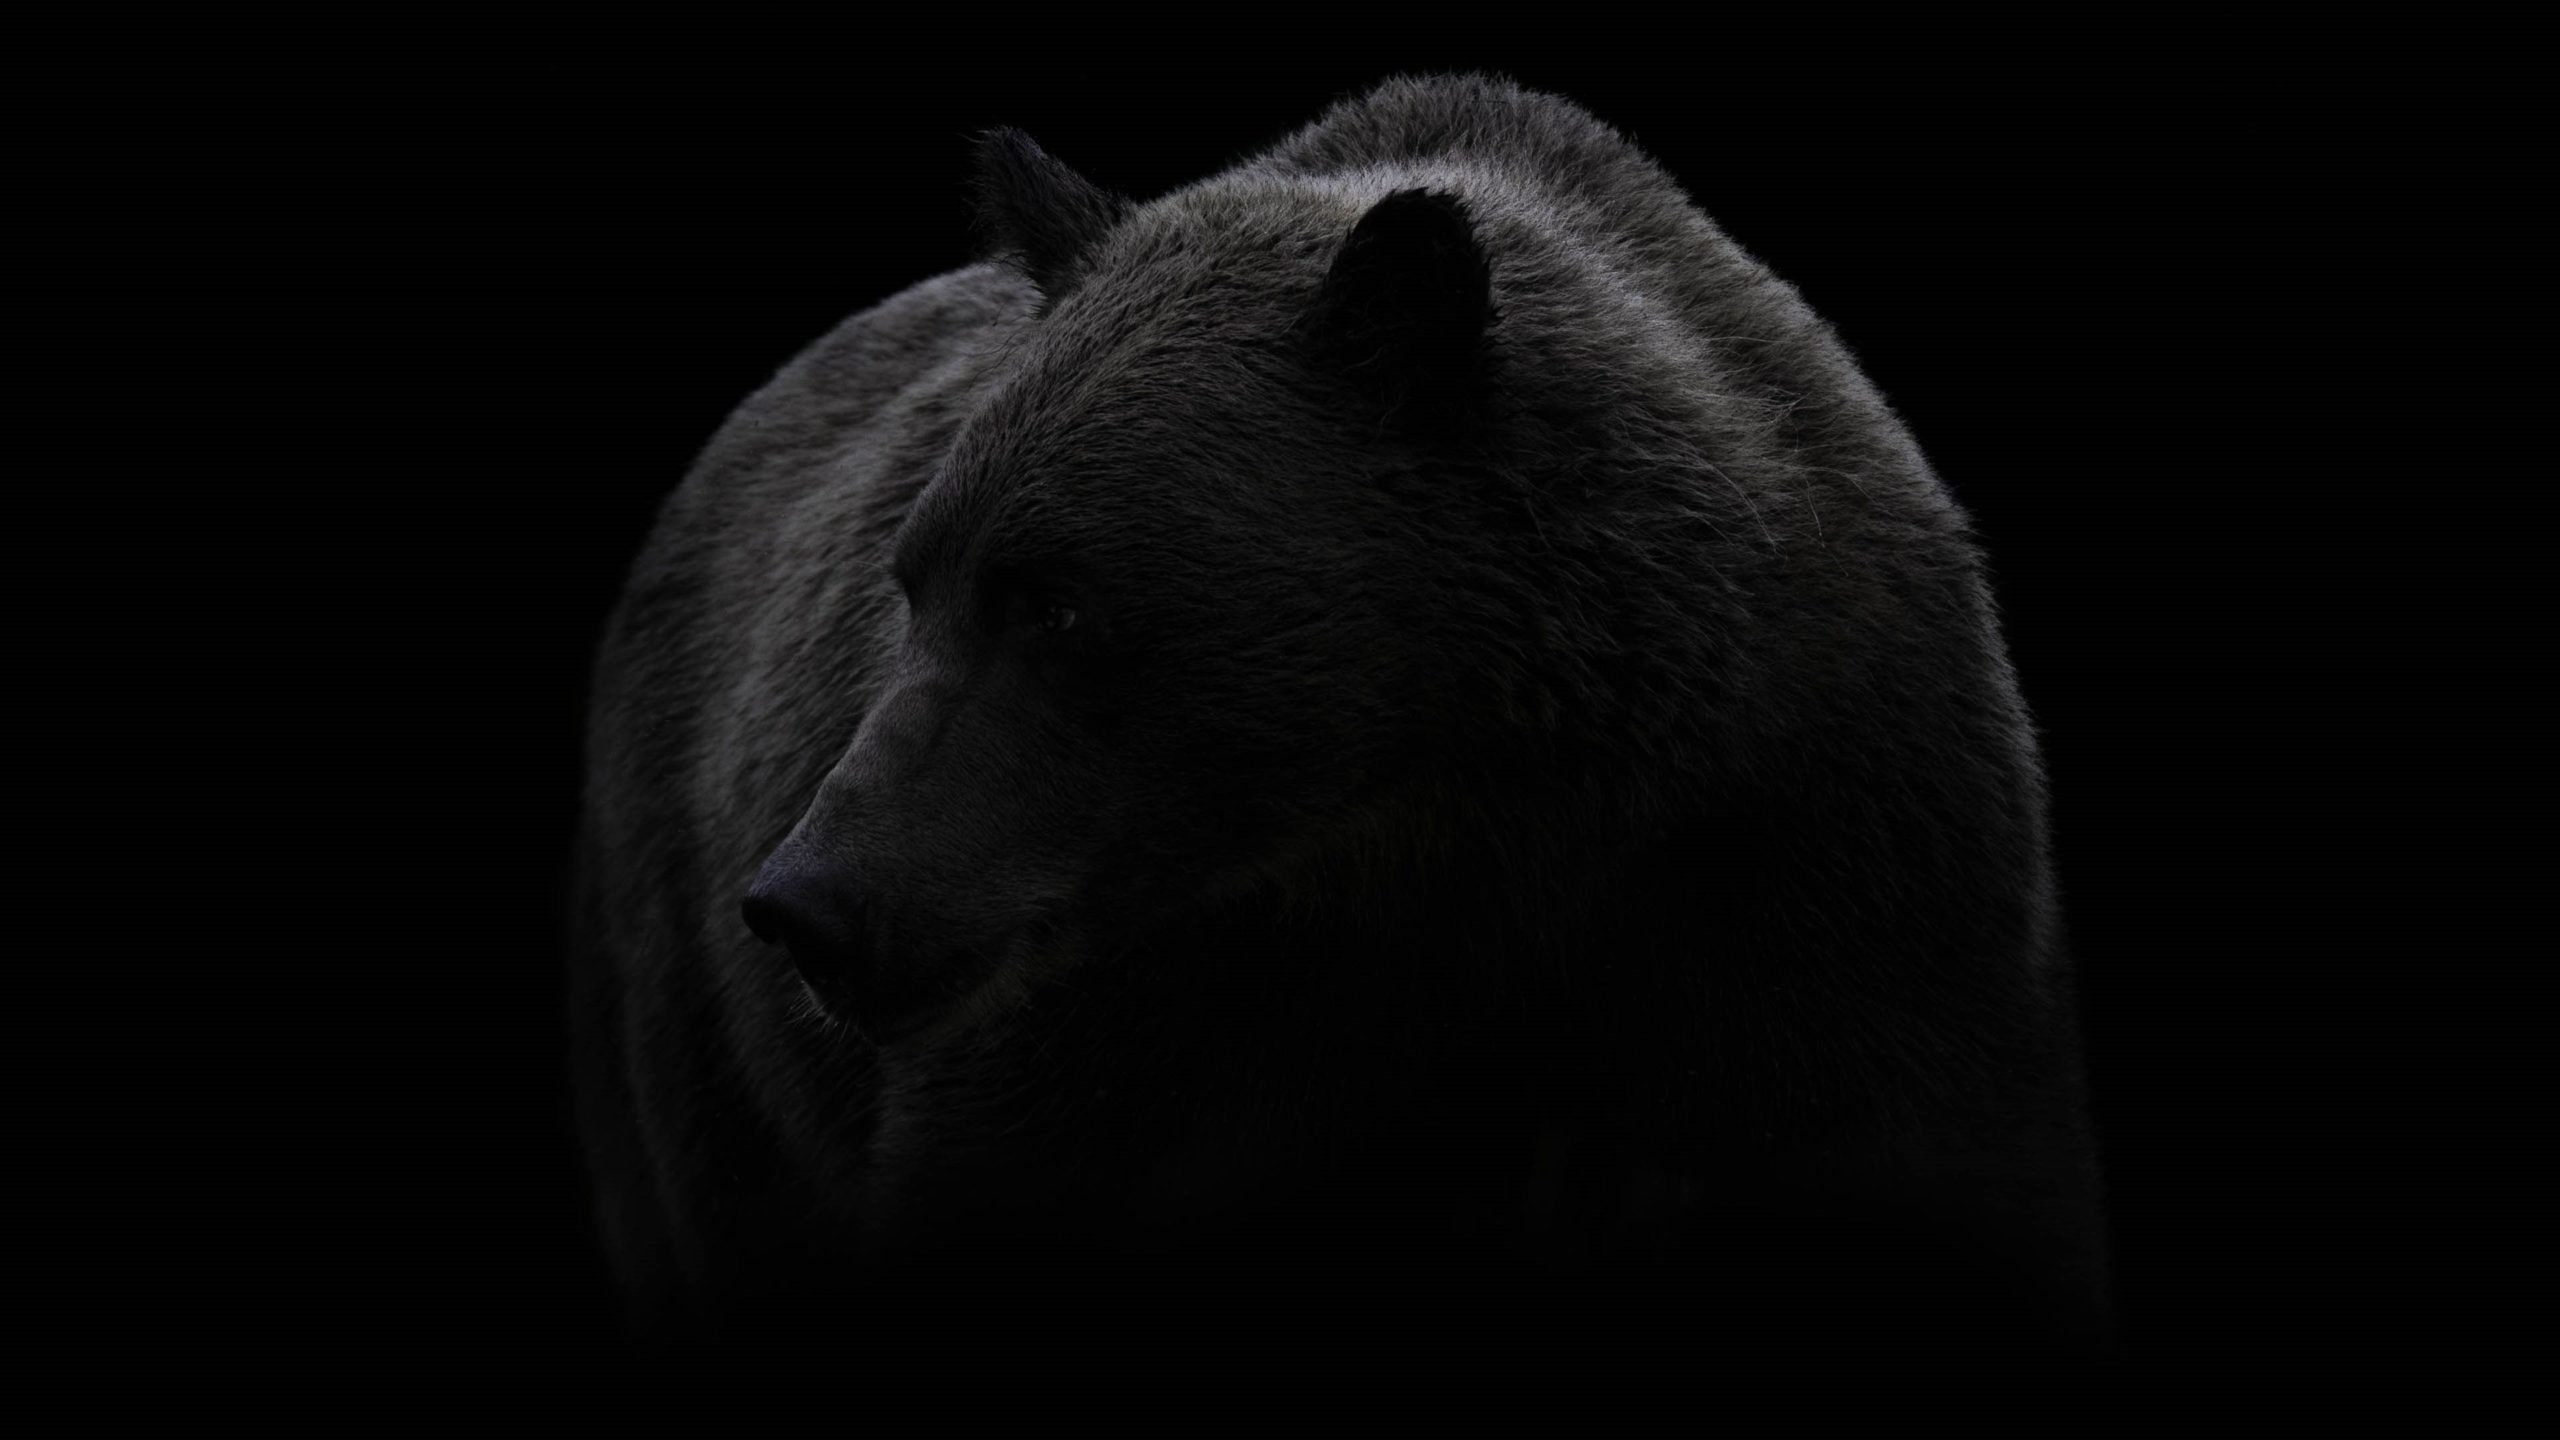 6. Bear Markets